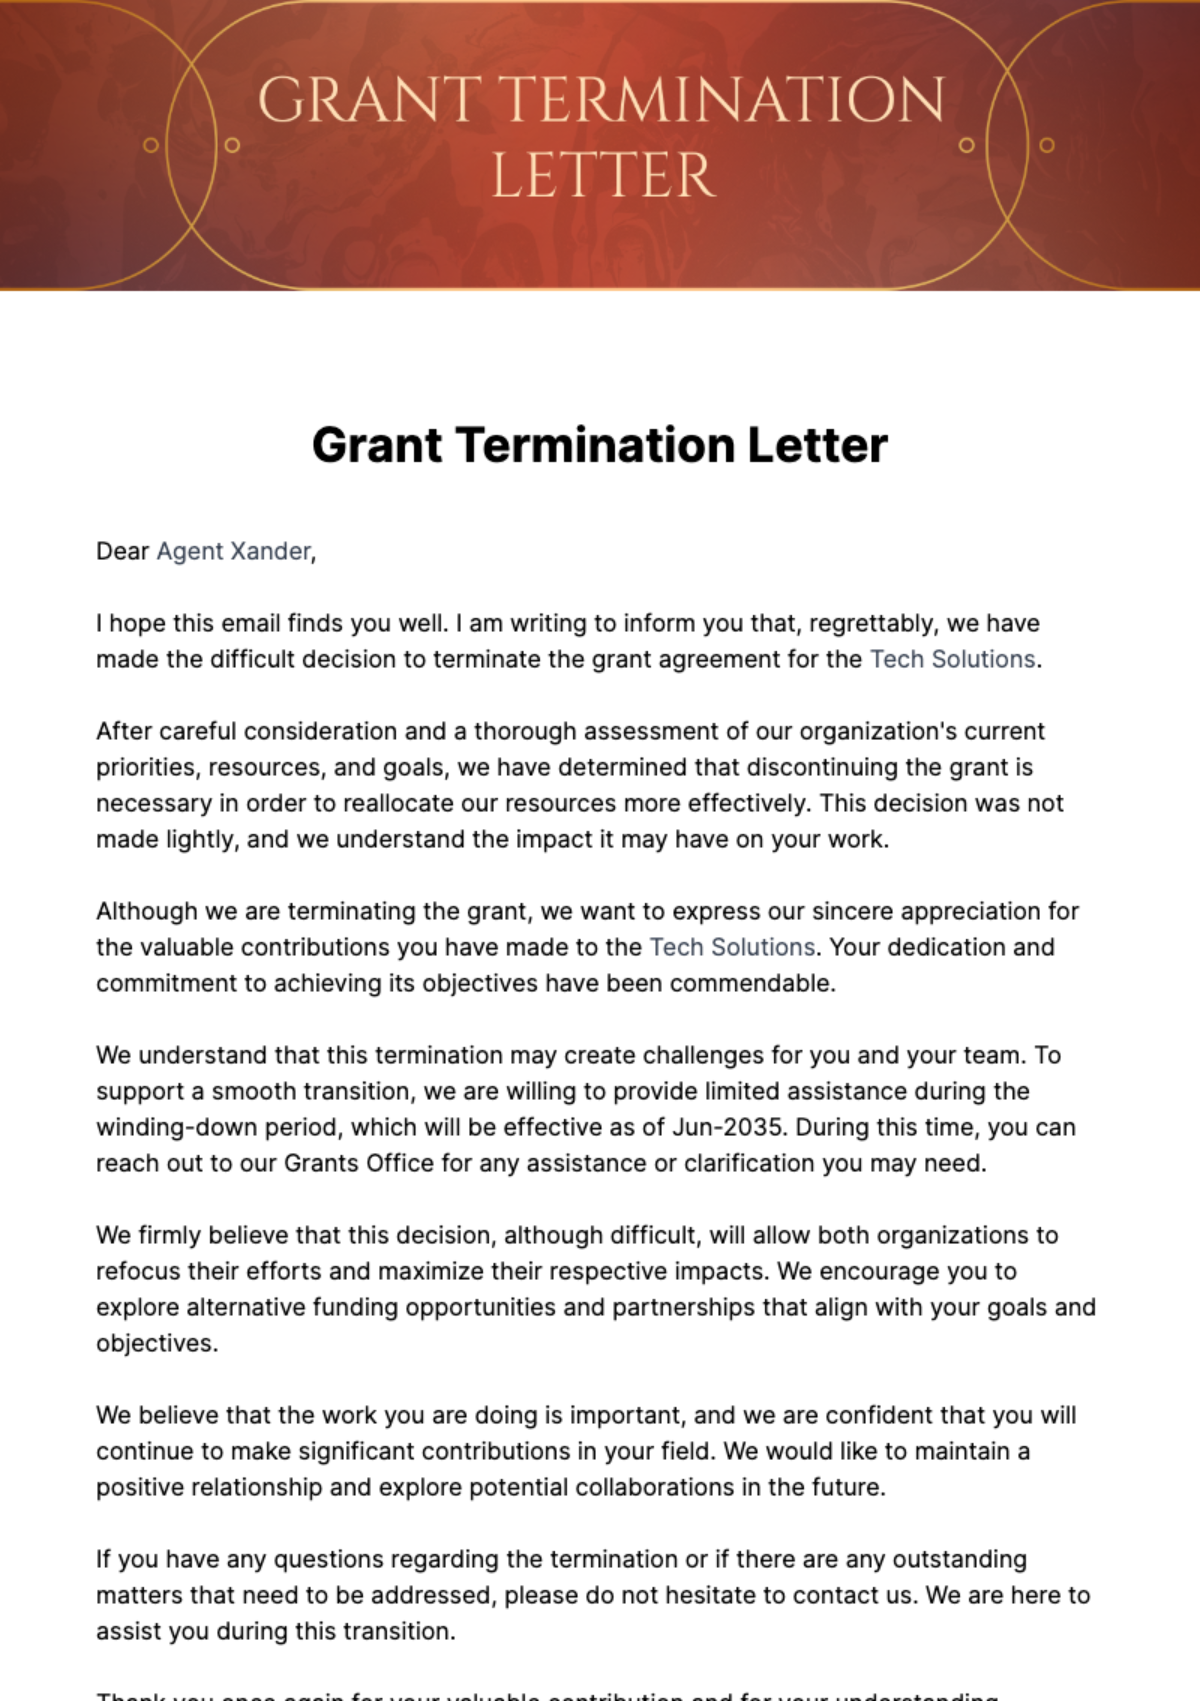 Grant Termination Letter Template